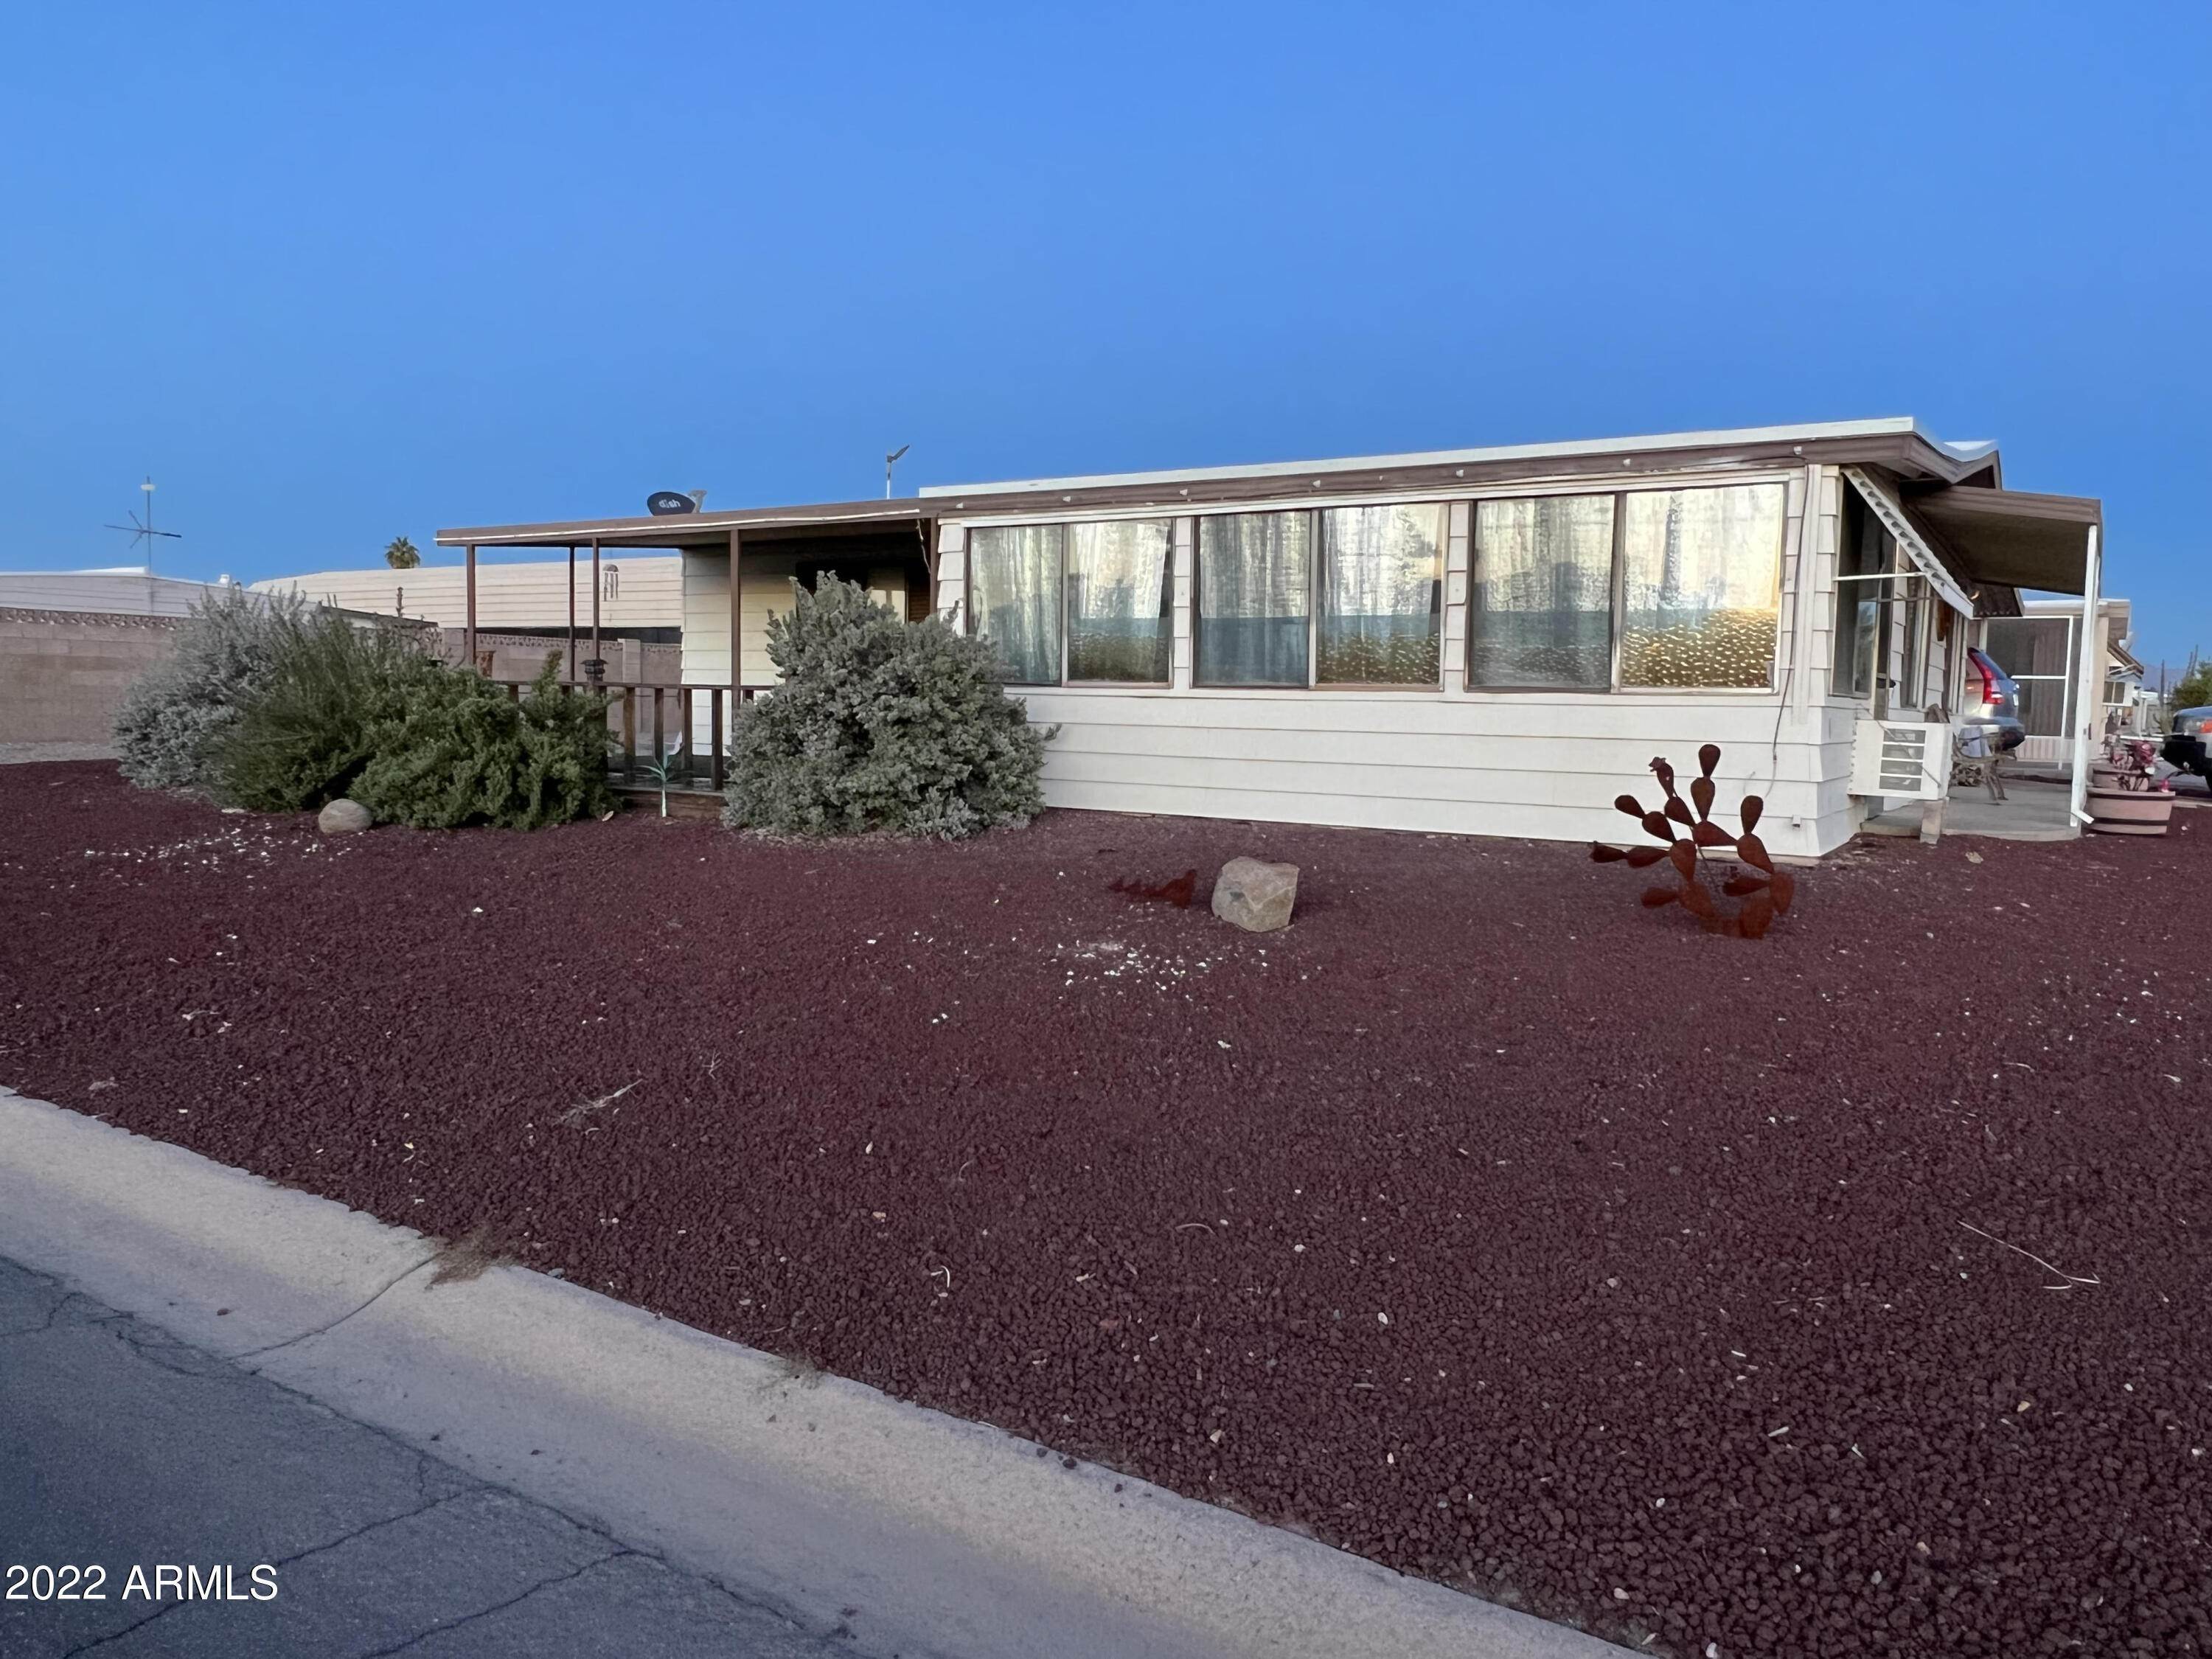 7. Mobile Home for Sale at Mesa, AZ 85208